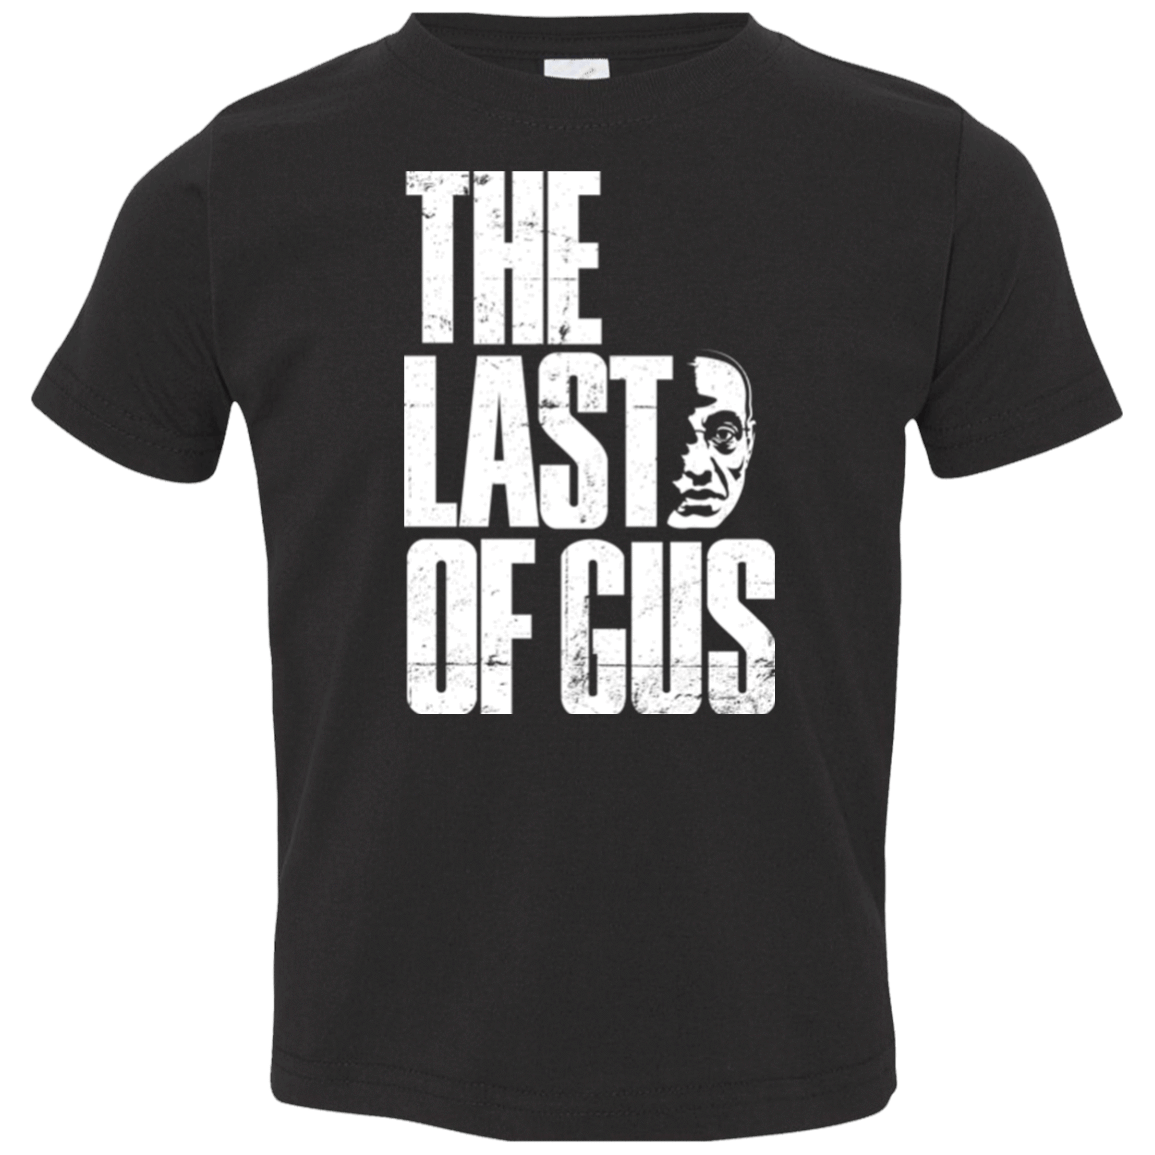 T-Shirts Black / 2T Last of Gus Toddler Premium T-Shirt